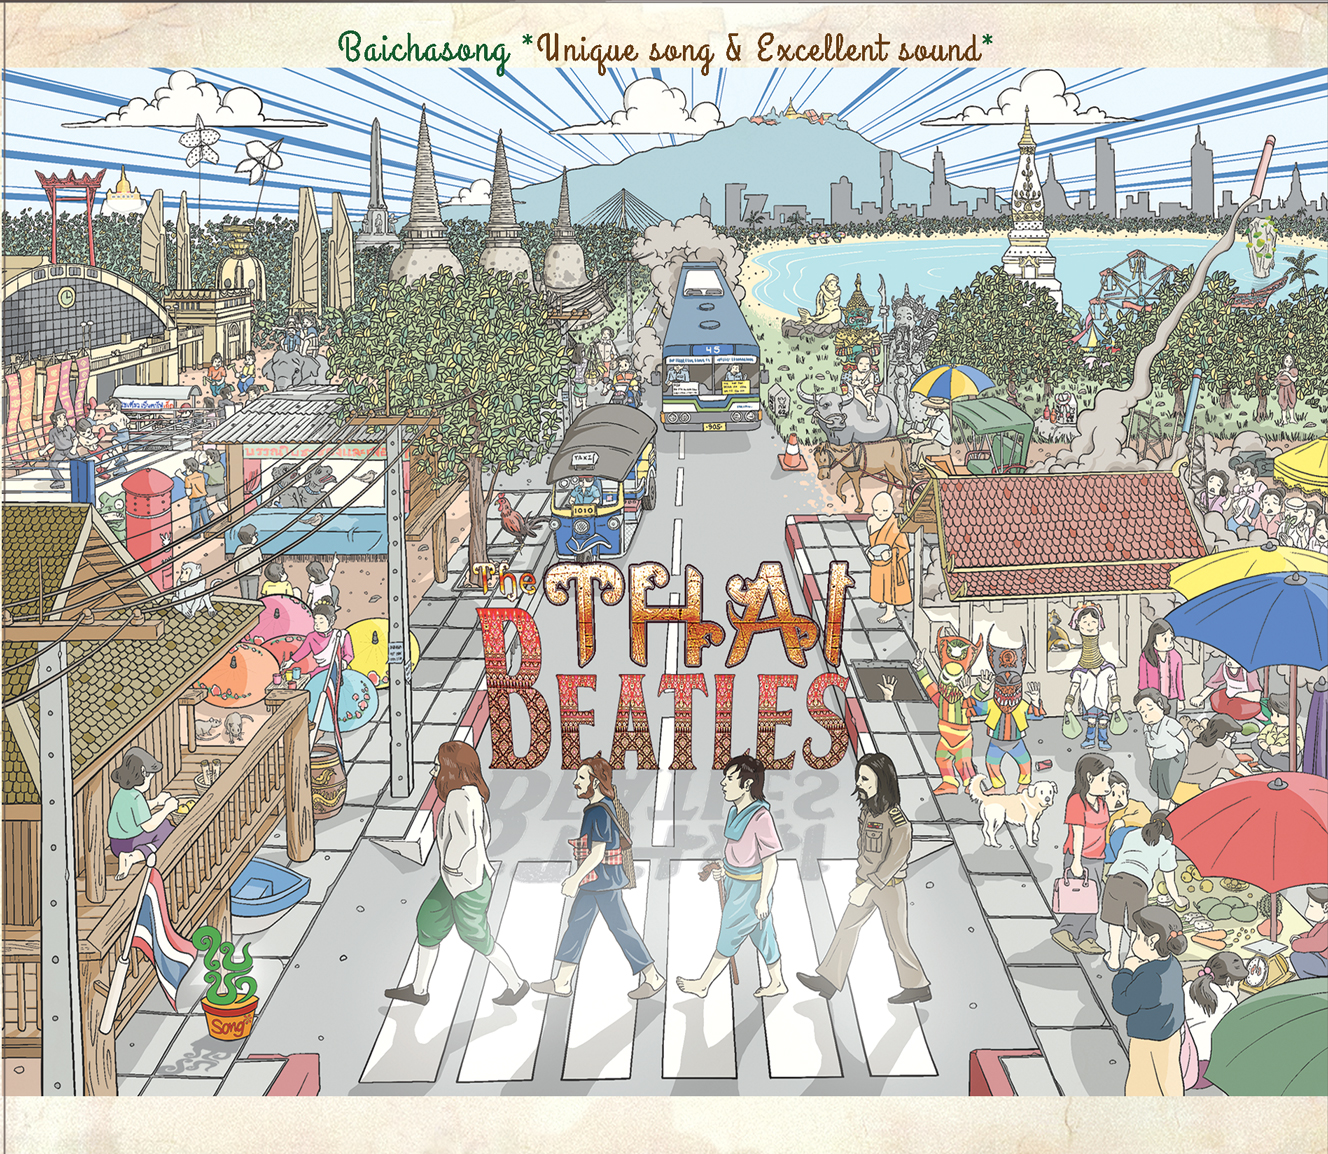 CD The THAI Beatles : Various Artists